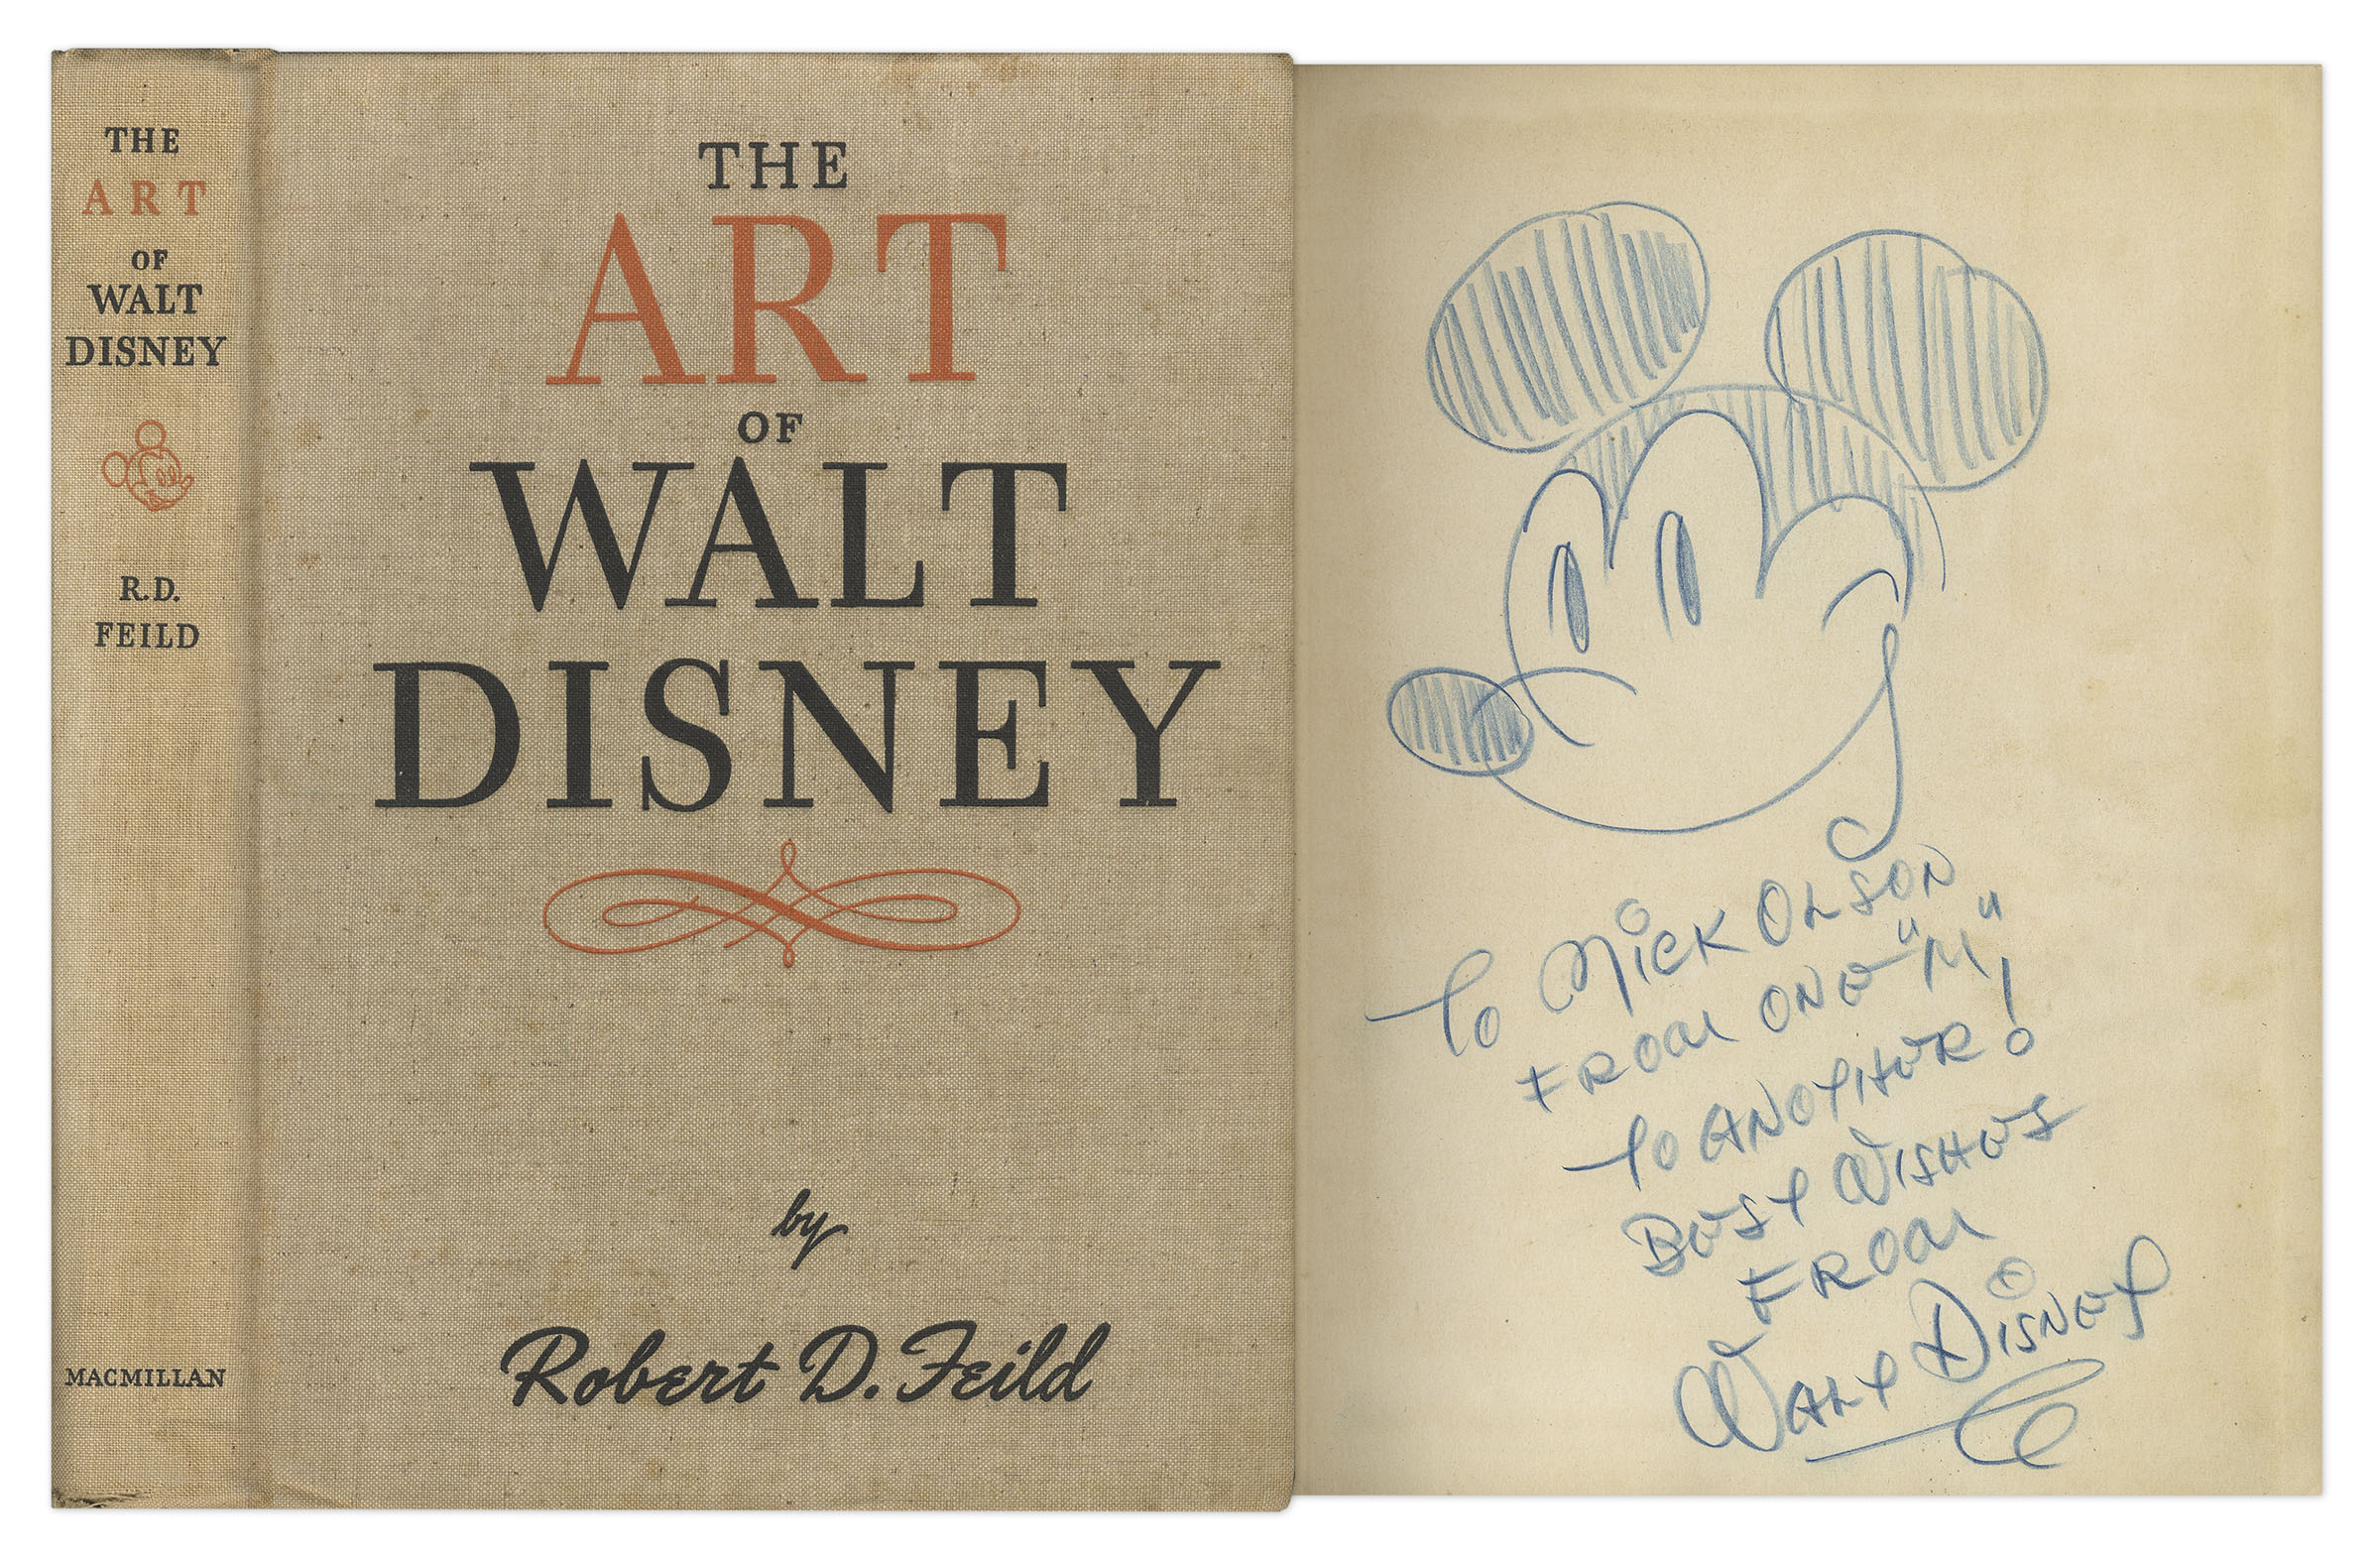 Walt Disney World White Autograph Book